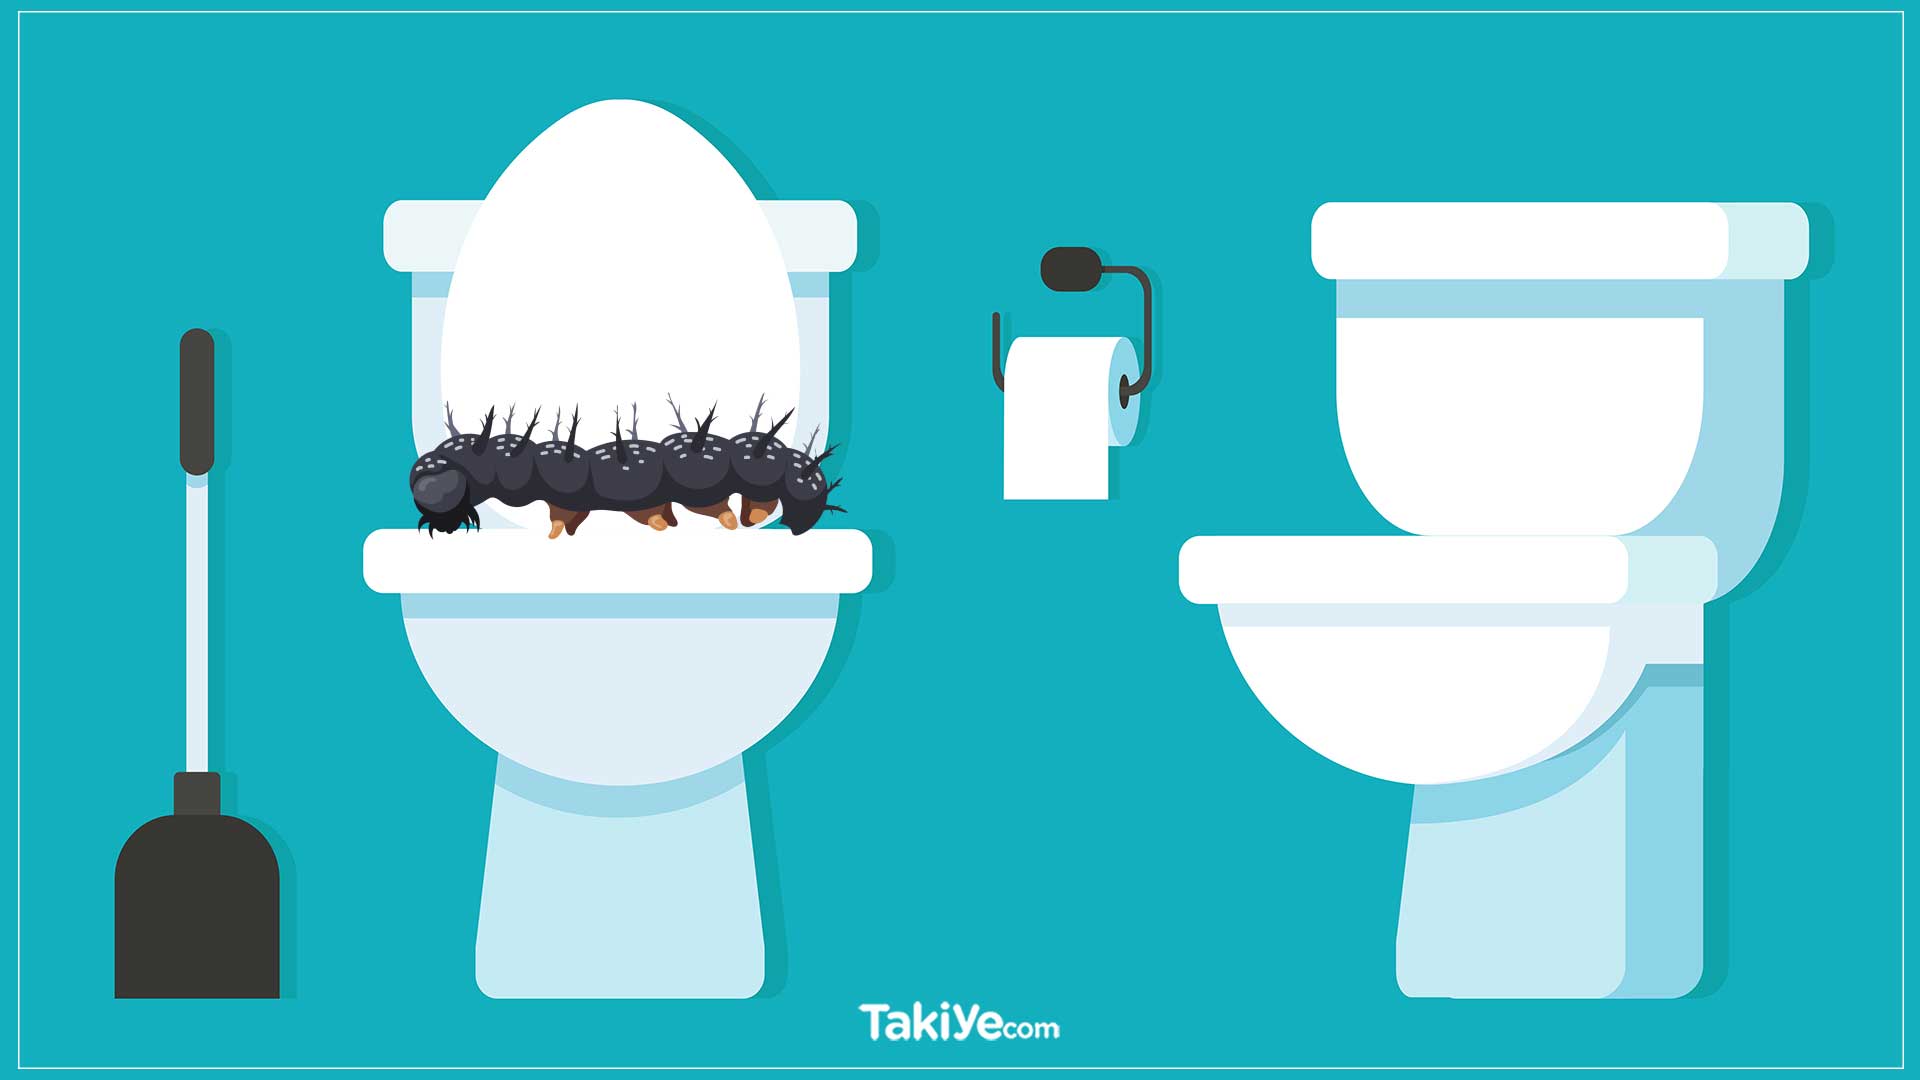 tuvalette siyah kurtçuklar